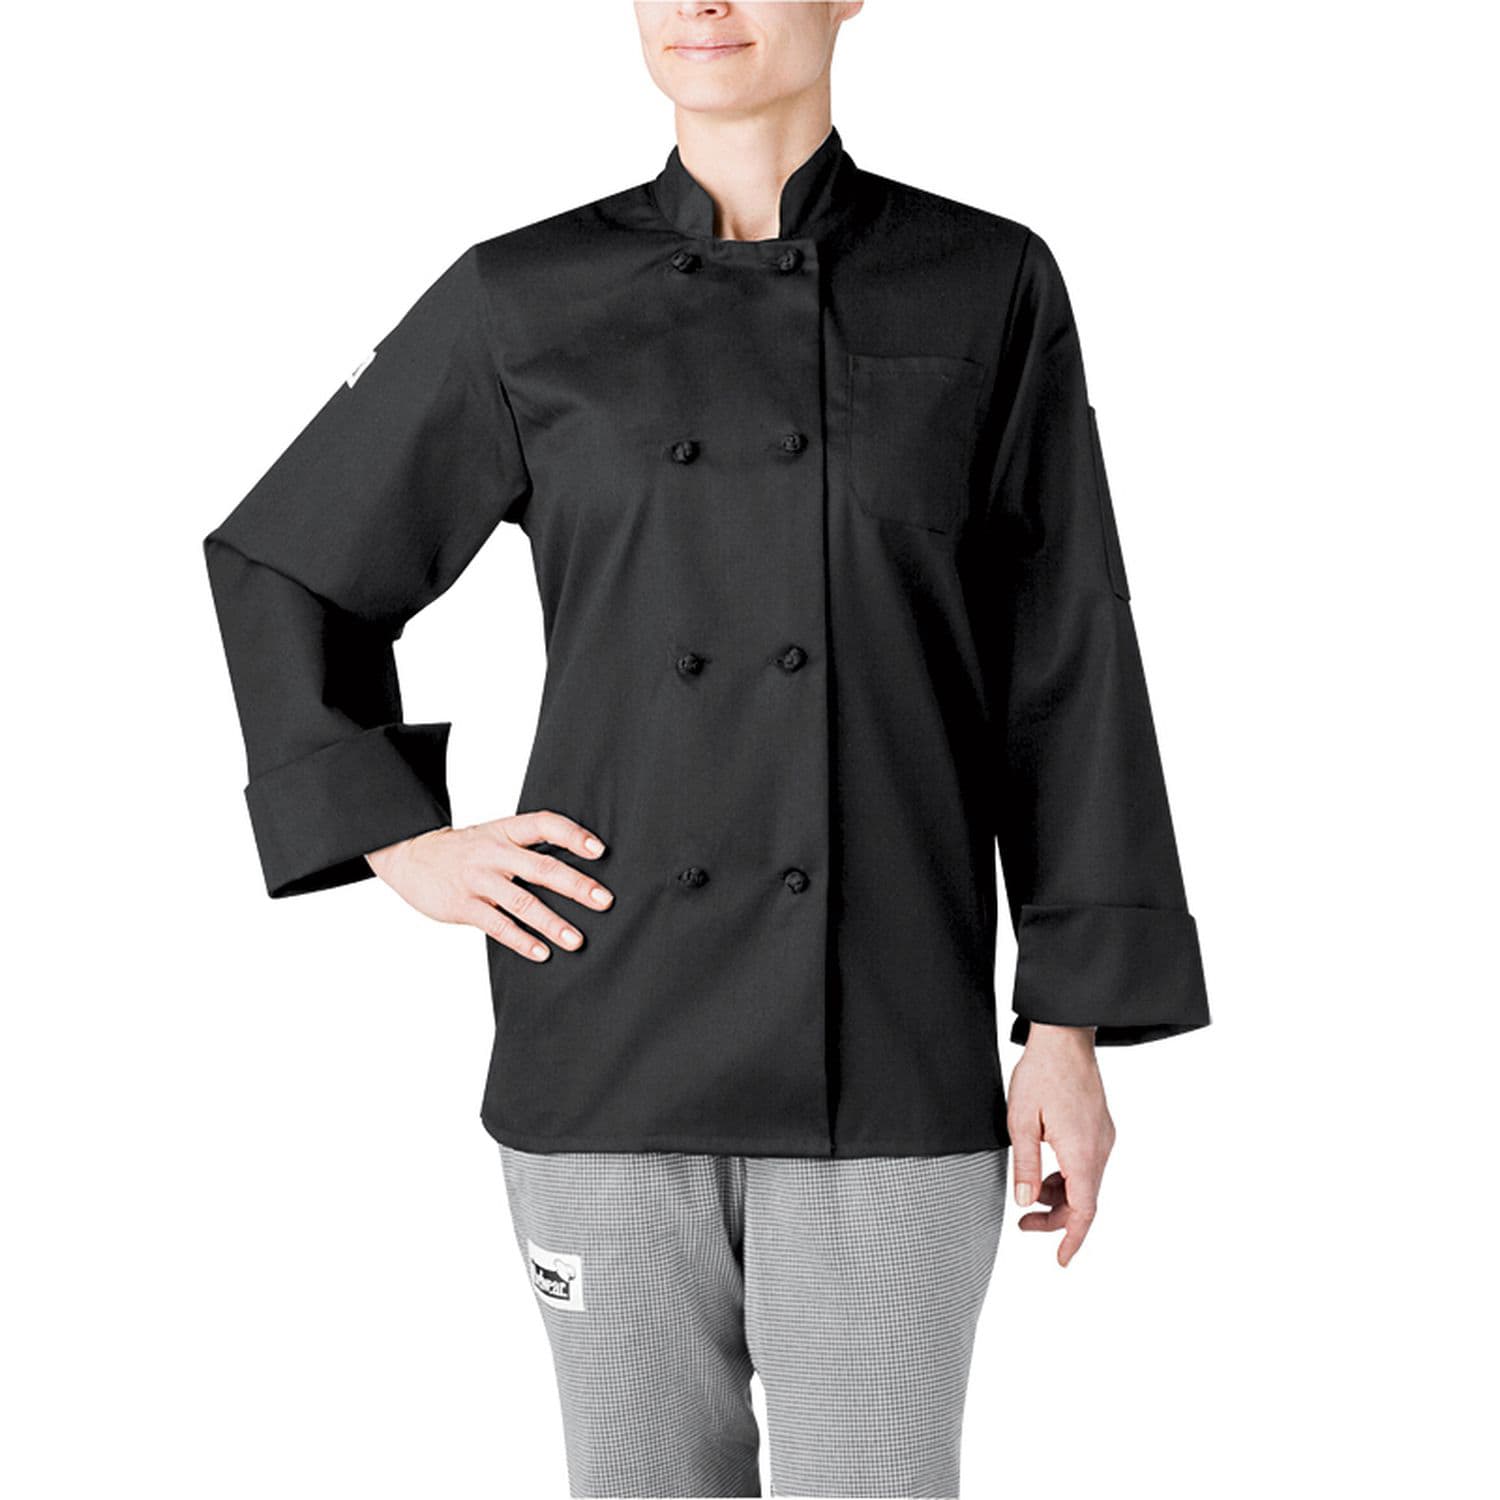 Chefwear 4430-30 MED Women's Black Long Sleeve Chef Jacket